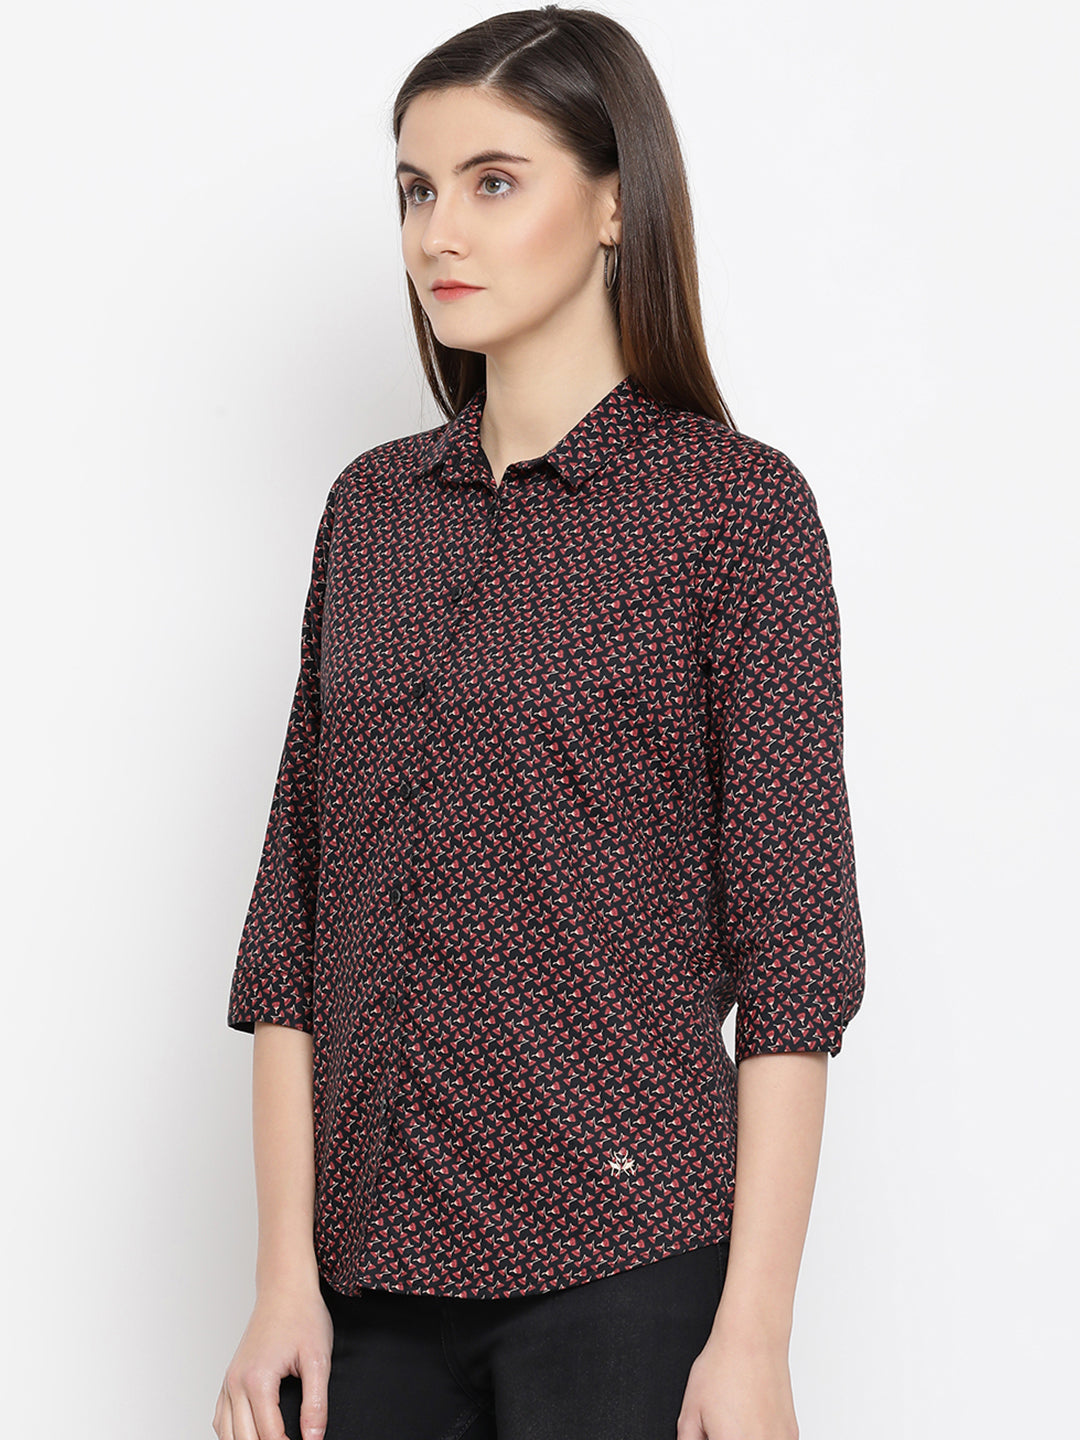 Printed Button up Shirt - Women Shirts